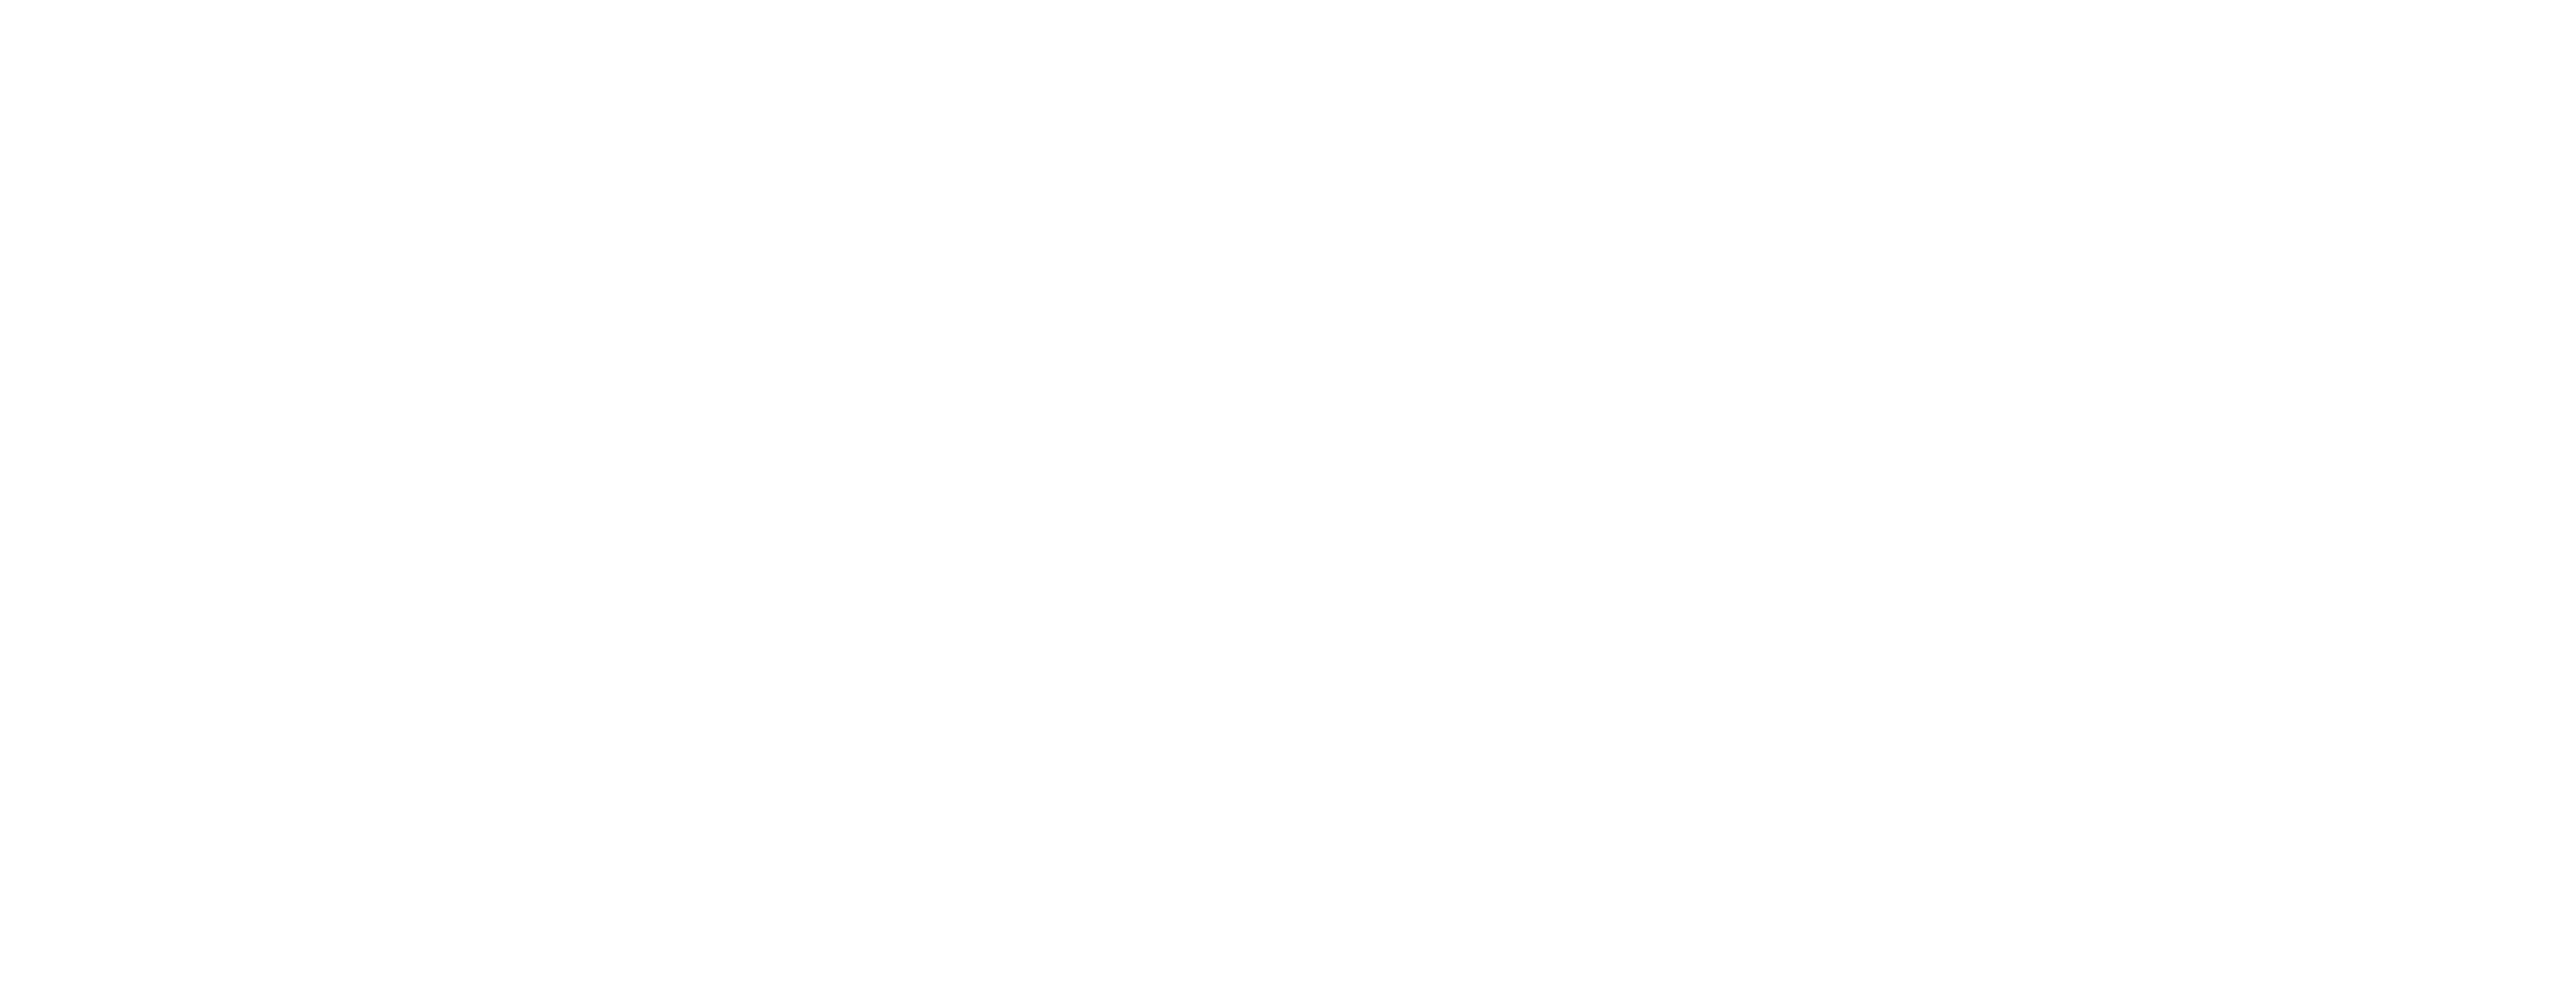 Omniverse Publishing